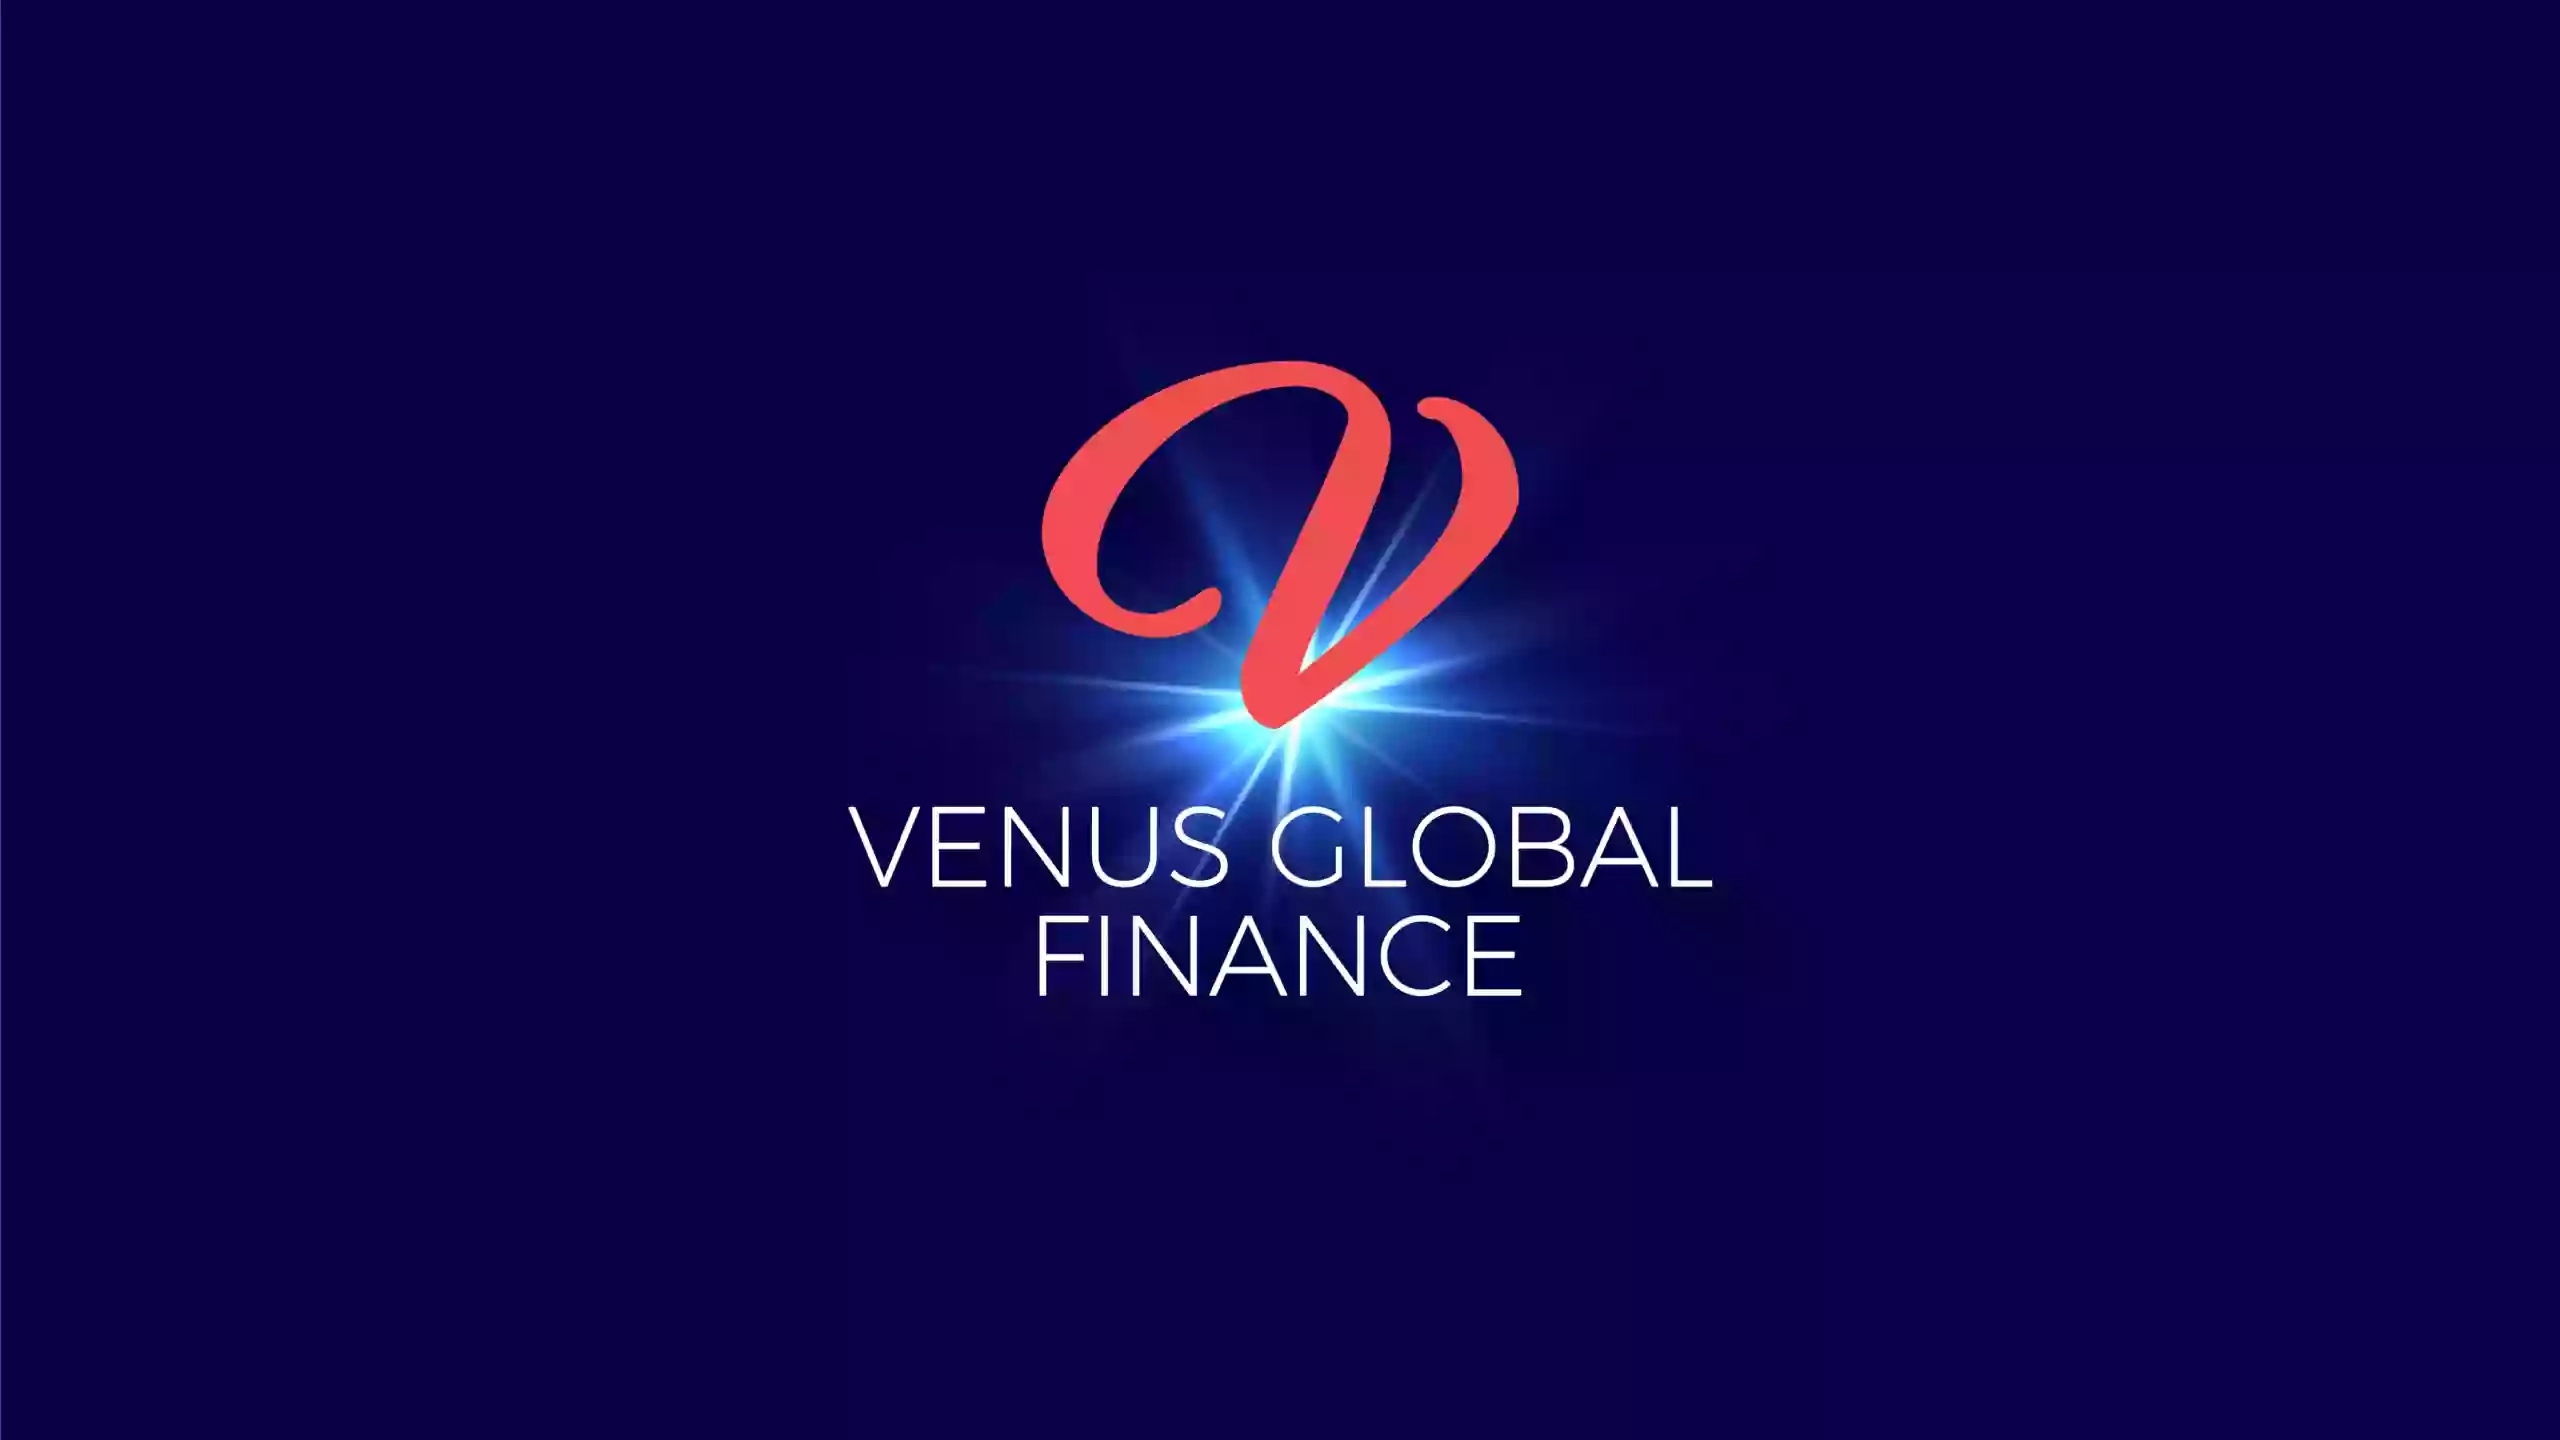 Venus Global Finance